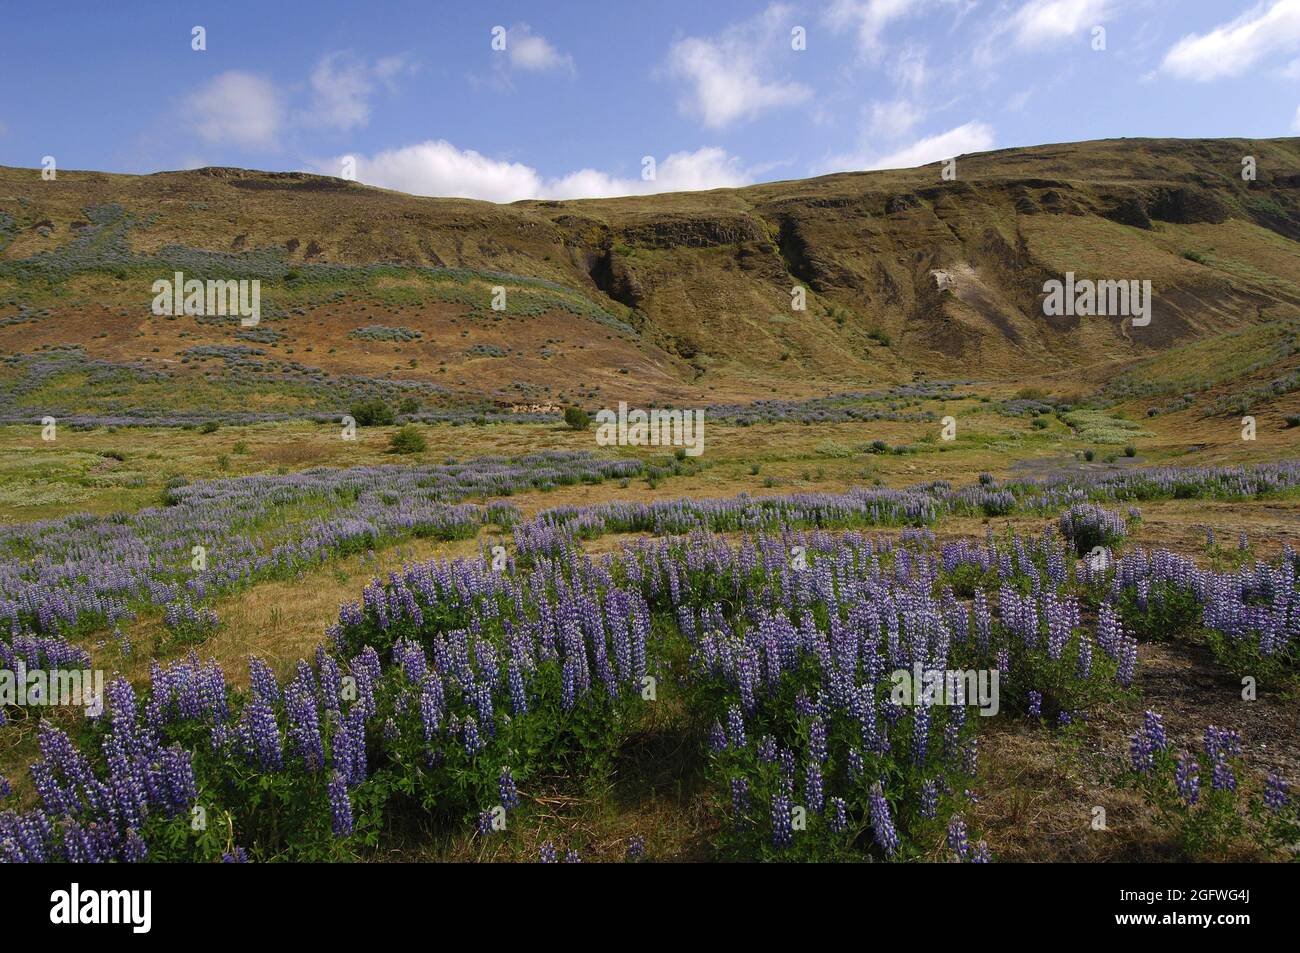 Lupino Nootka, lupino de Alaska (Lupinus nootkatensis), valle lleno de lupino en Stong, Pjorsardalur, centro-sur de Islandia, Islandia Foto de stock